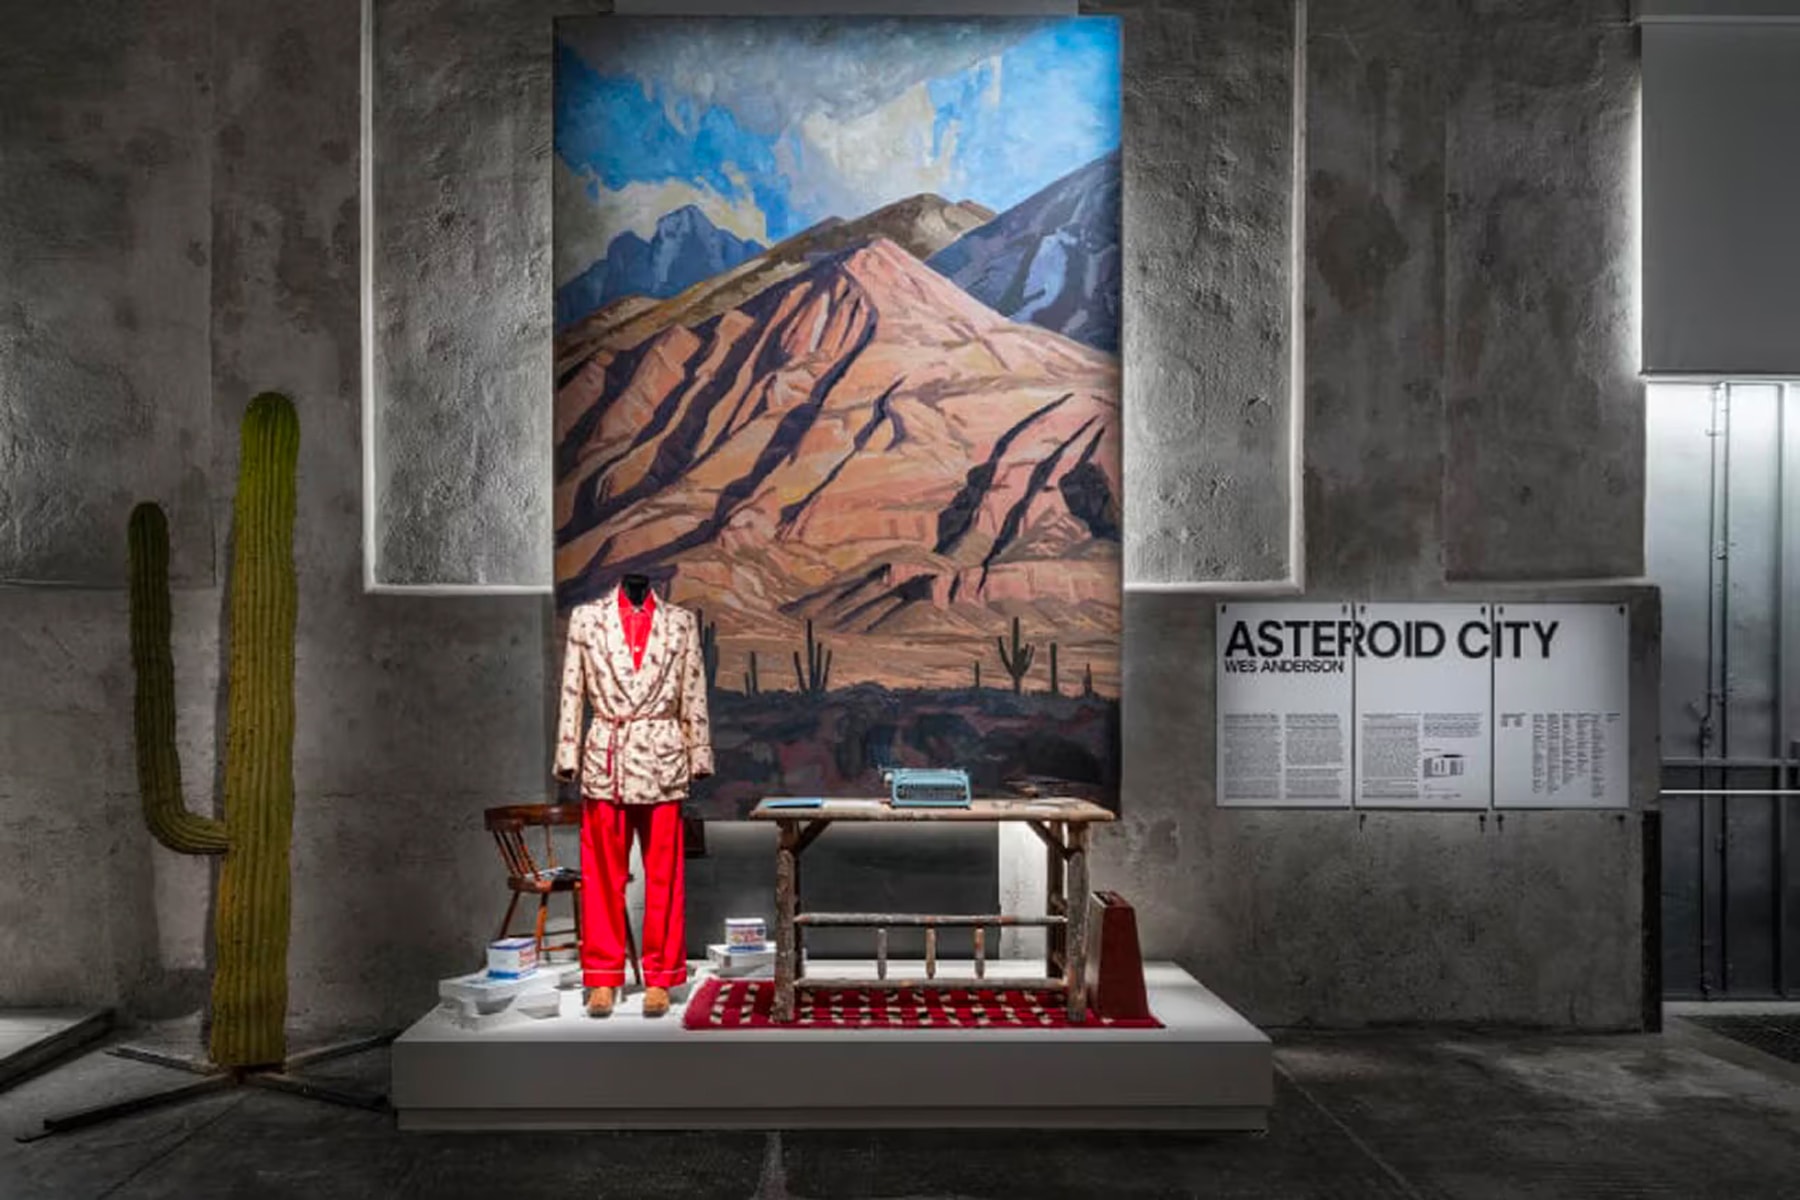 走進 Wes Anderson 電影《小行星城 Asteroid City》主題沈浸式展覽